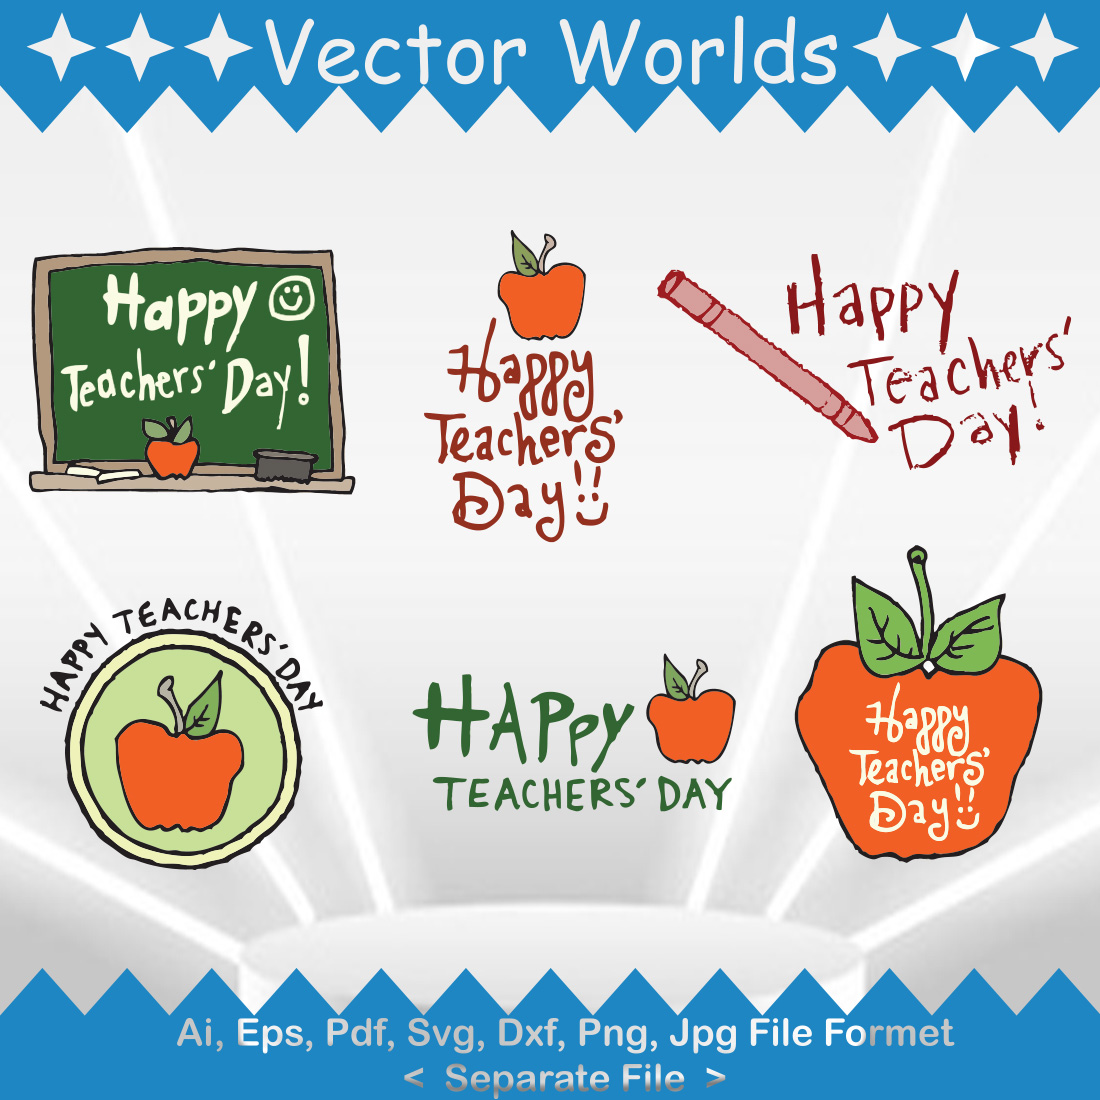 Happy Teacher Day SVG Vector Design cover image.